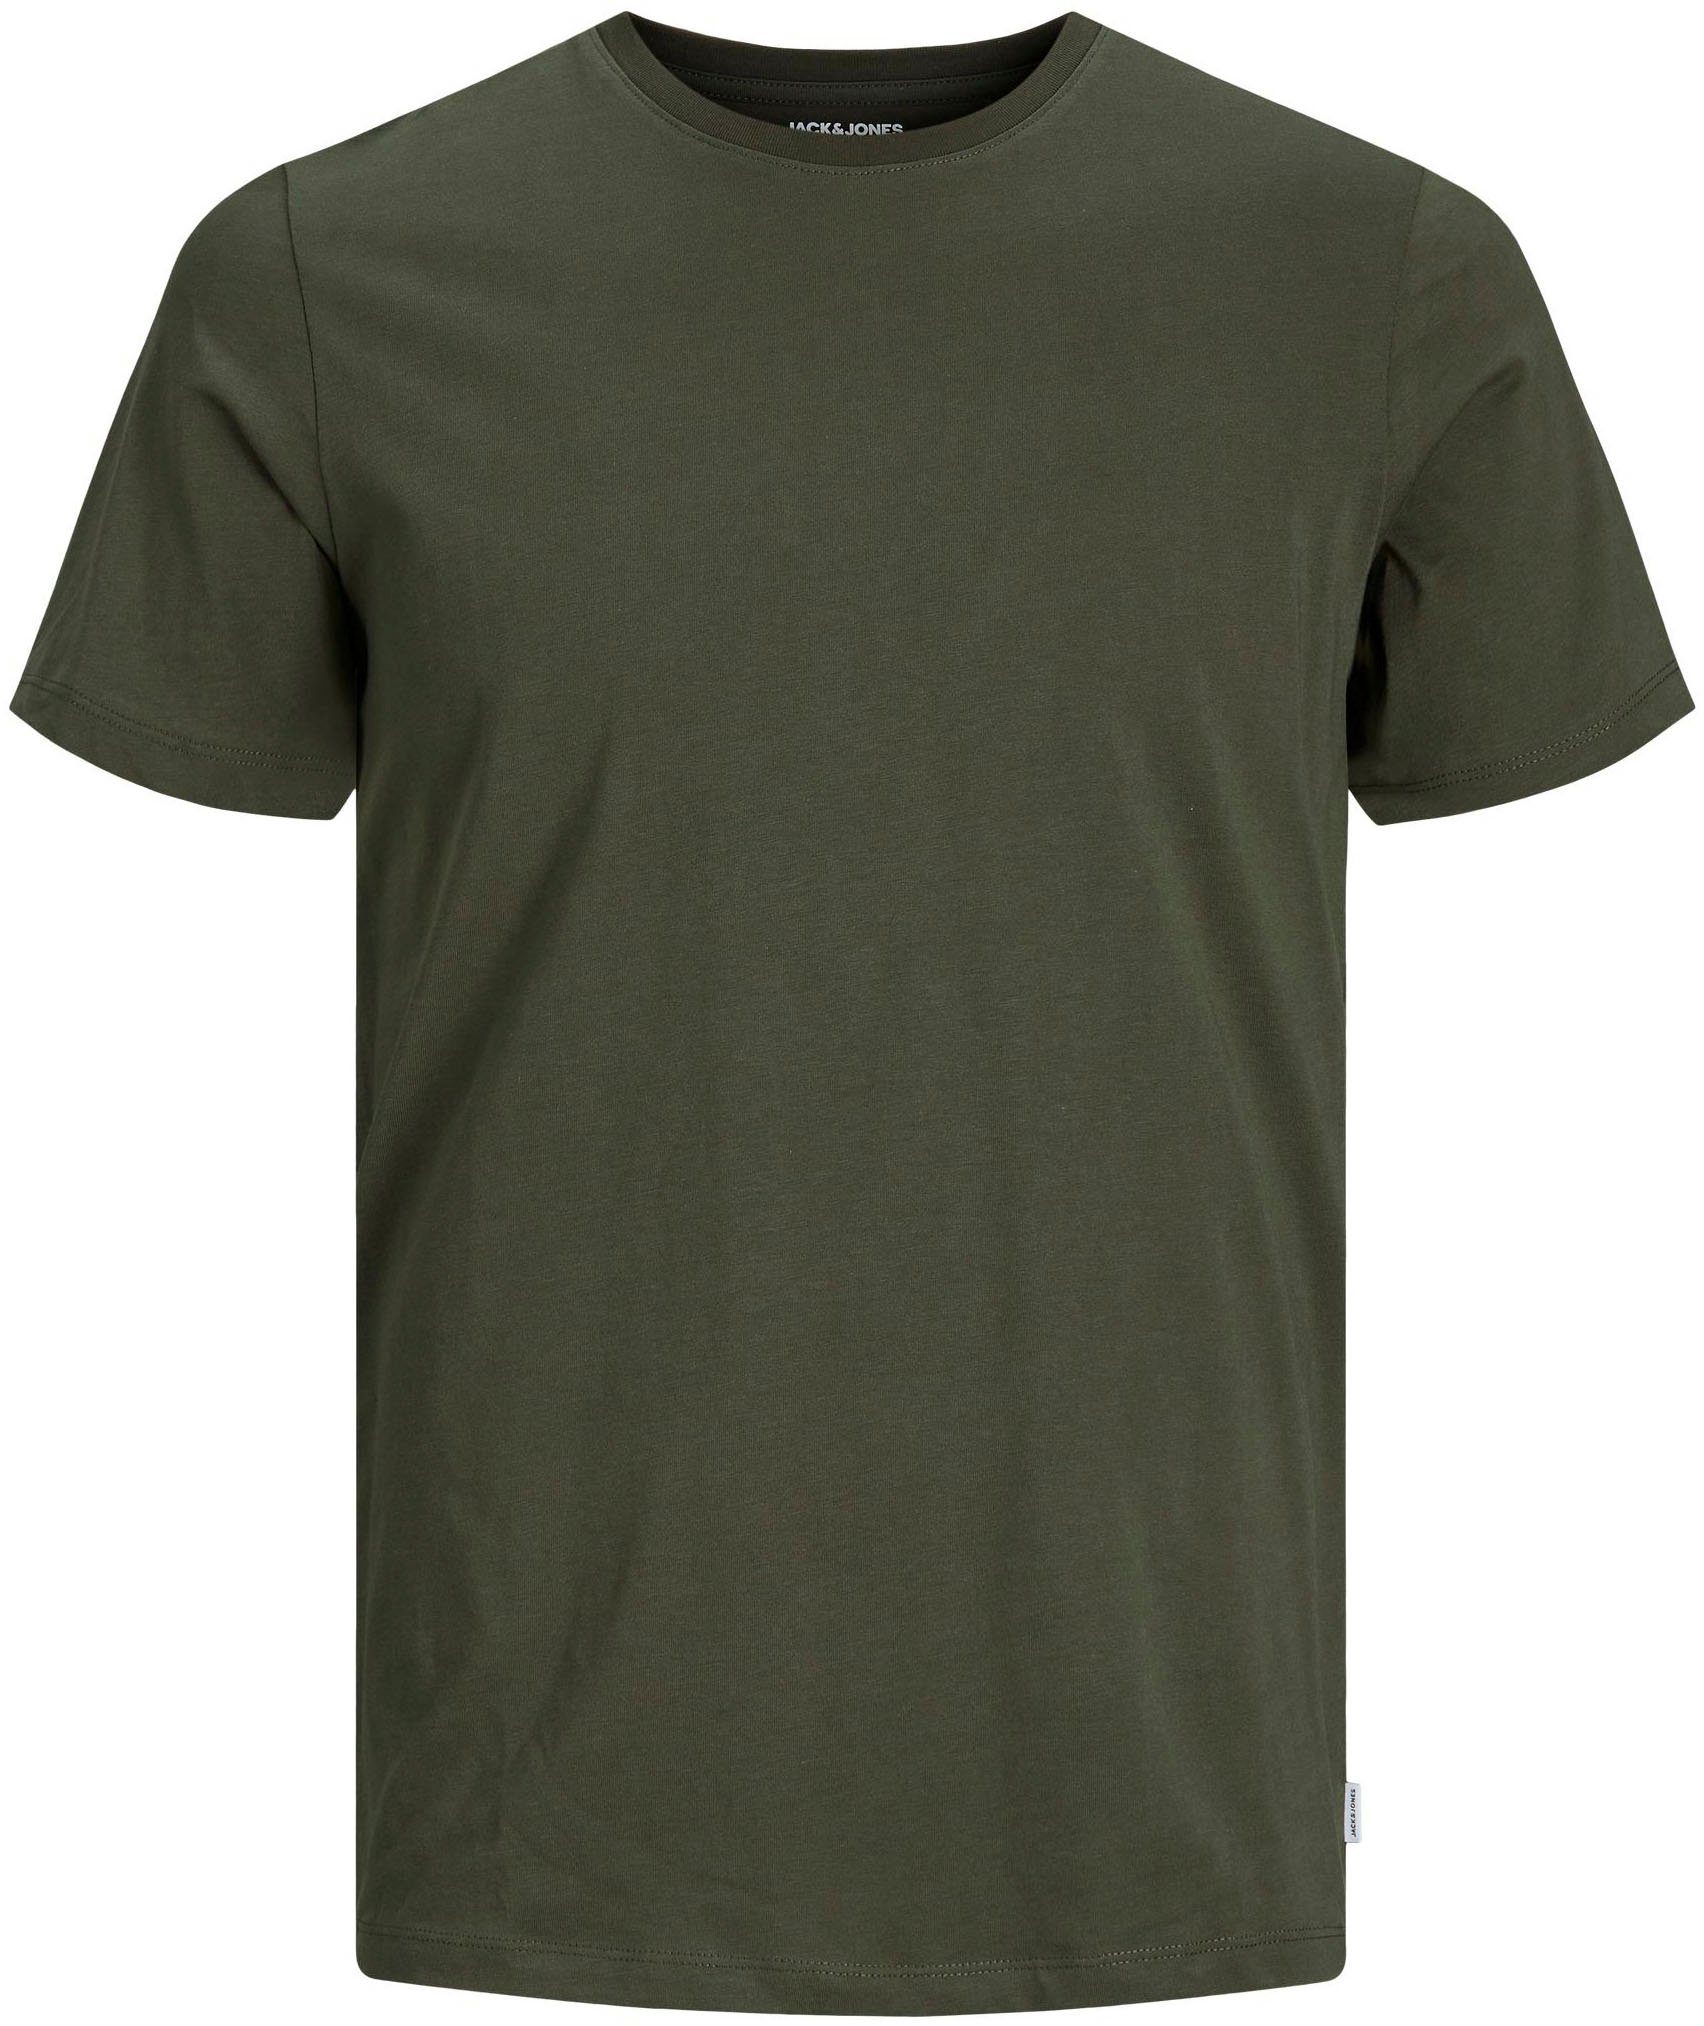 Jack & Jones T-Shirt ORGANIC TEE olivgrün BASIC